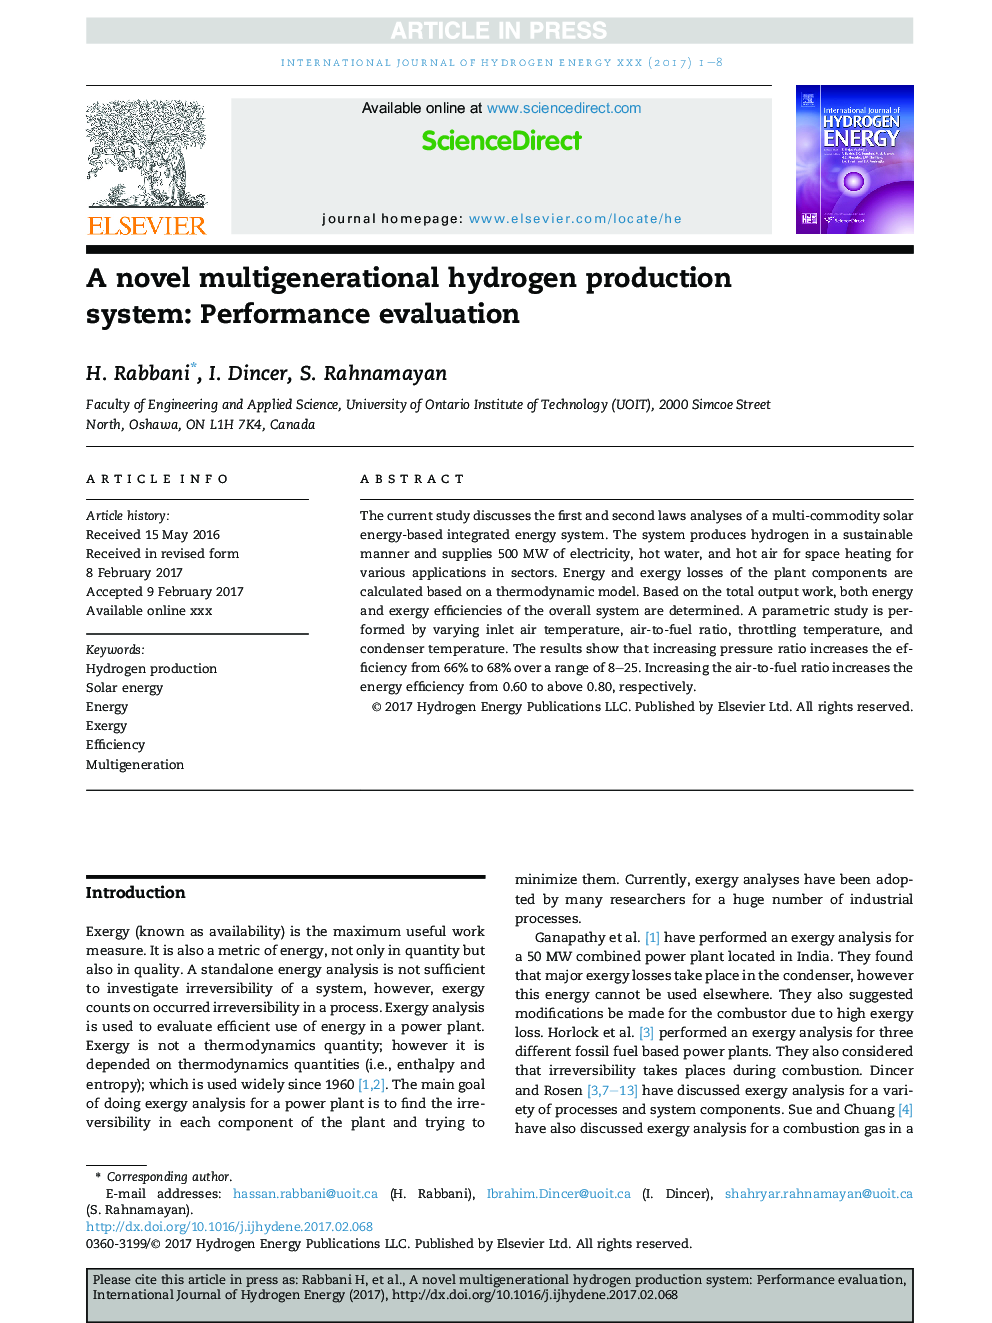 A novel multigenerational hydrogen production system: Performance evaluation